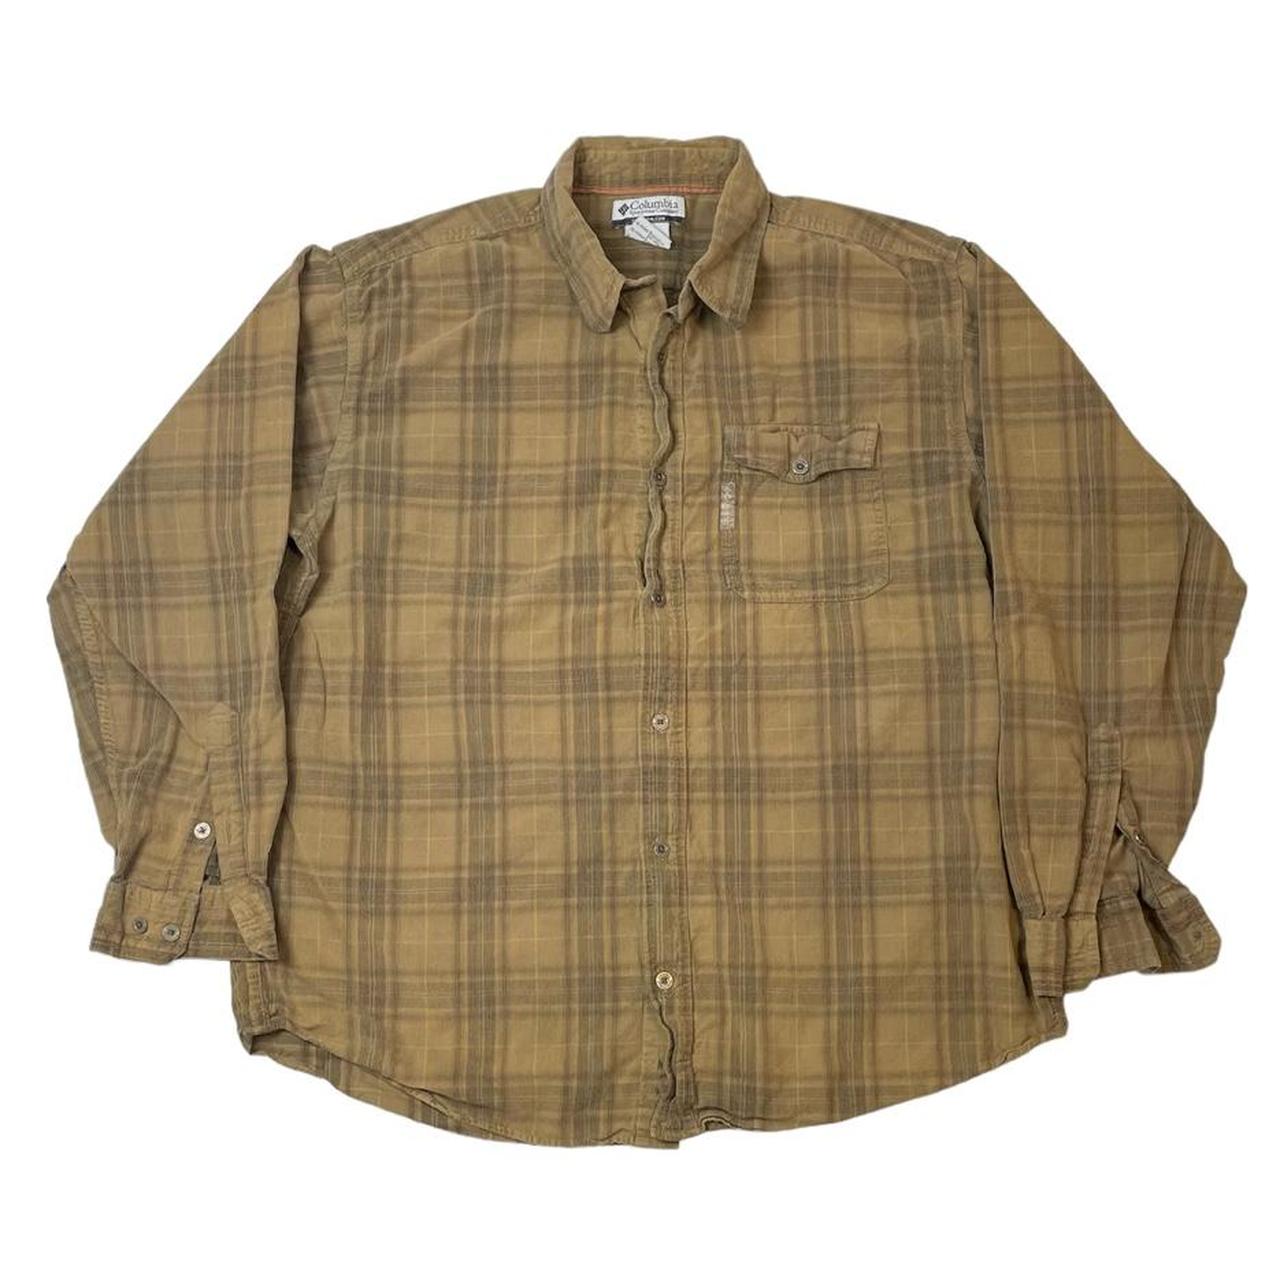 Vintage Columbia Corduroy shirt in brown 📌 Our... - Depop